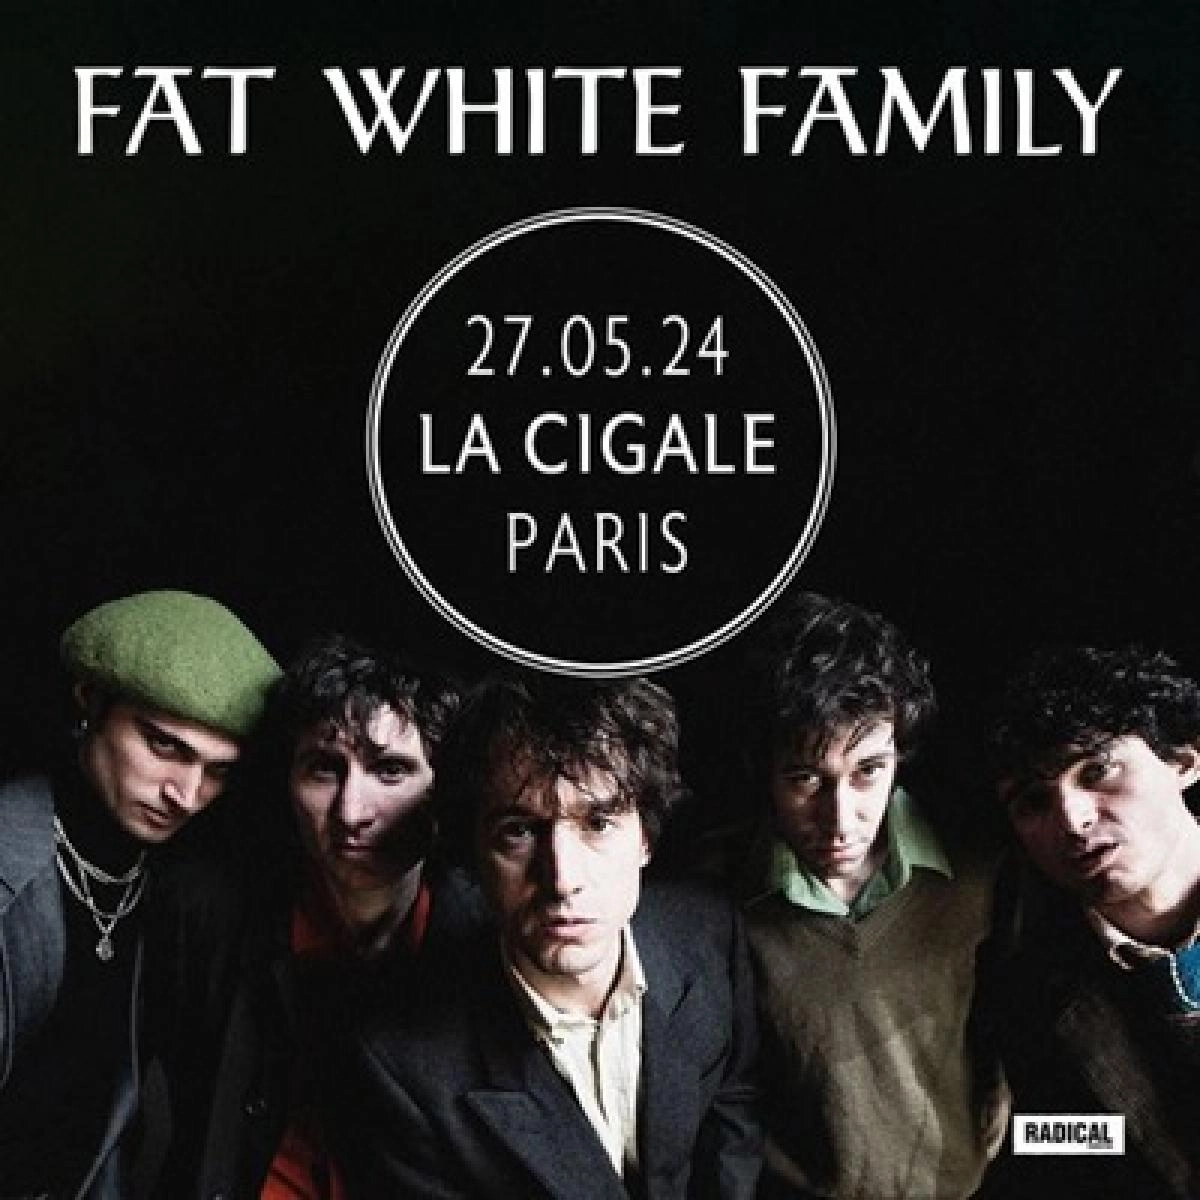 Fat White Family at La Cigale Tickets